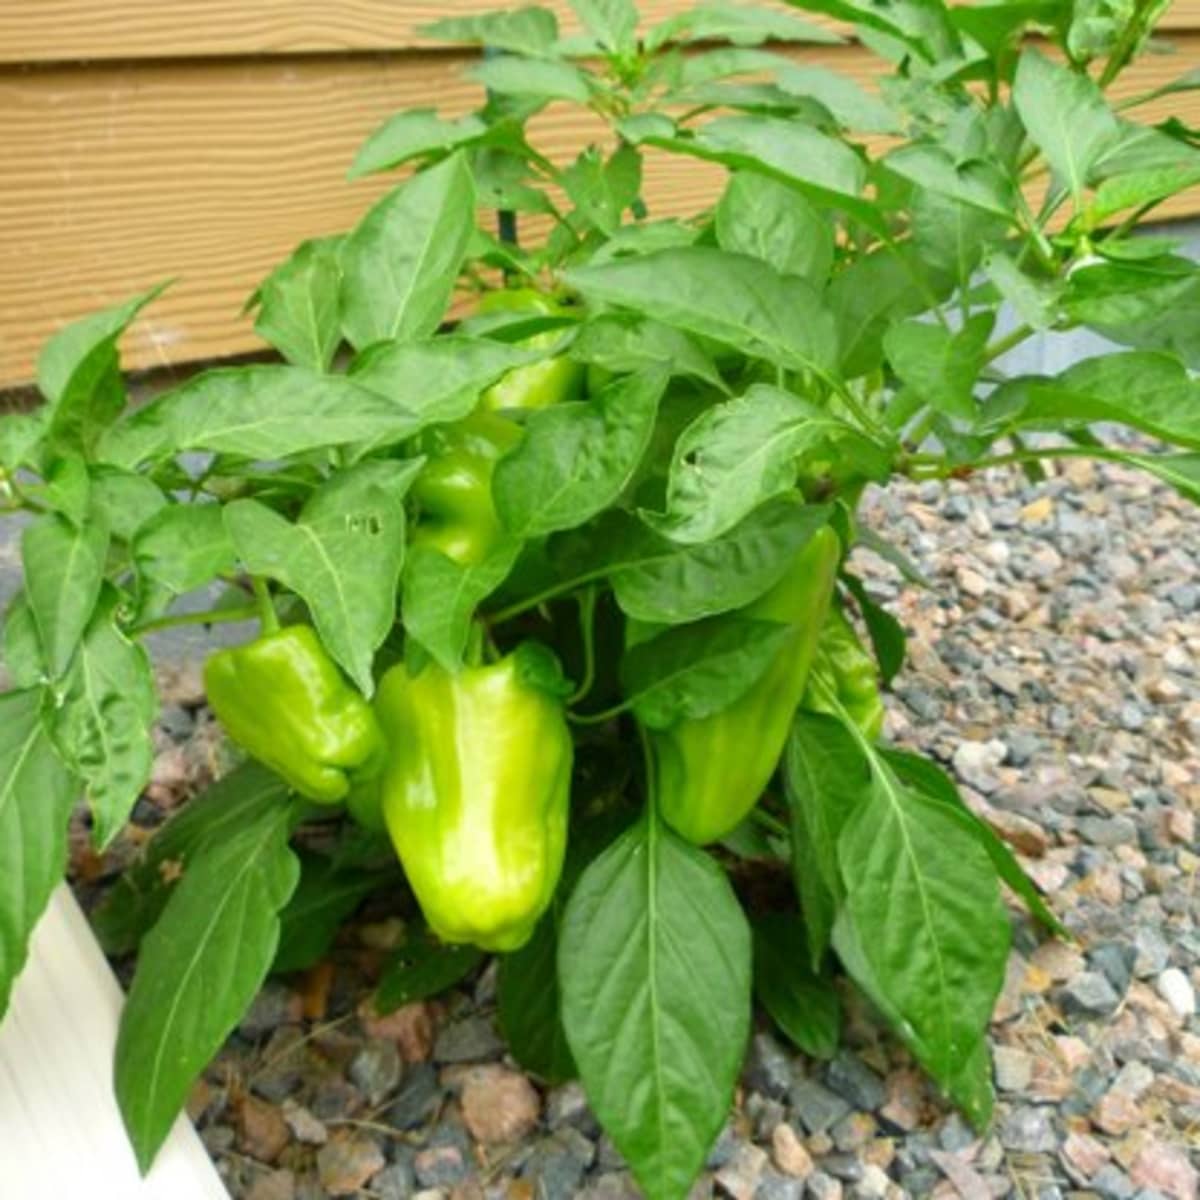 5 Easy Tips for Caring for Your Pepper Seedlings